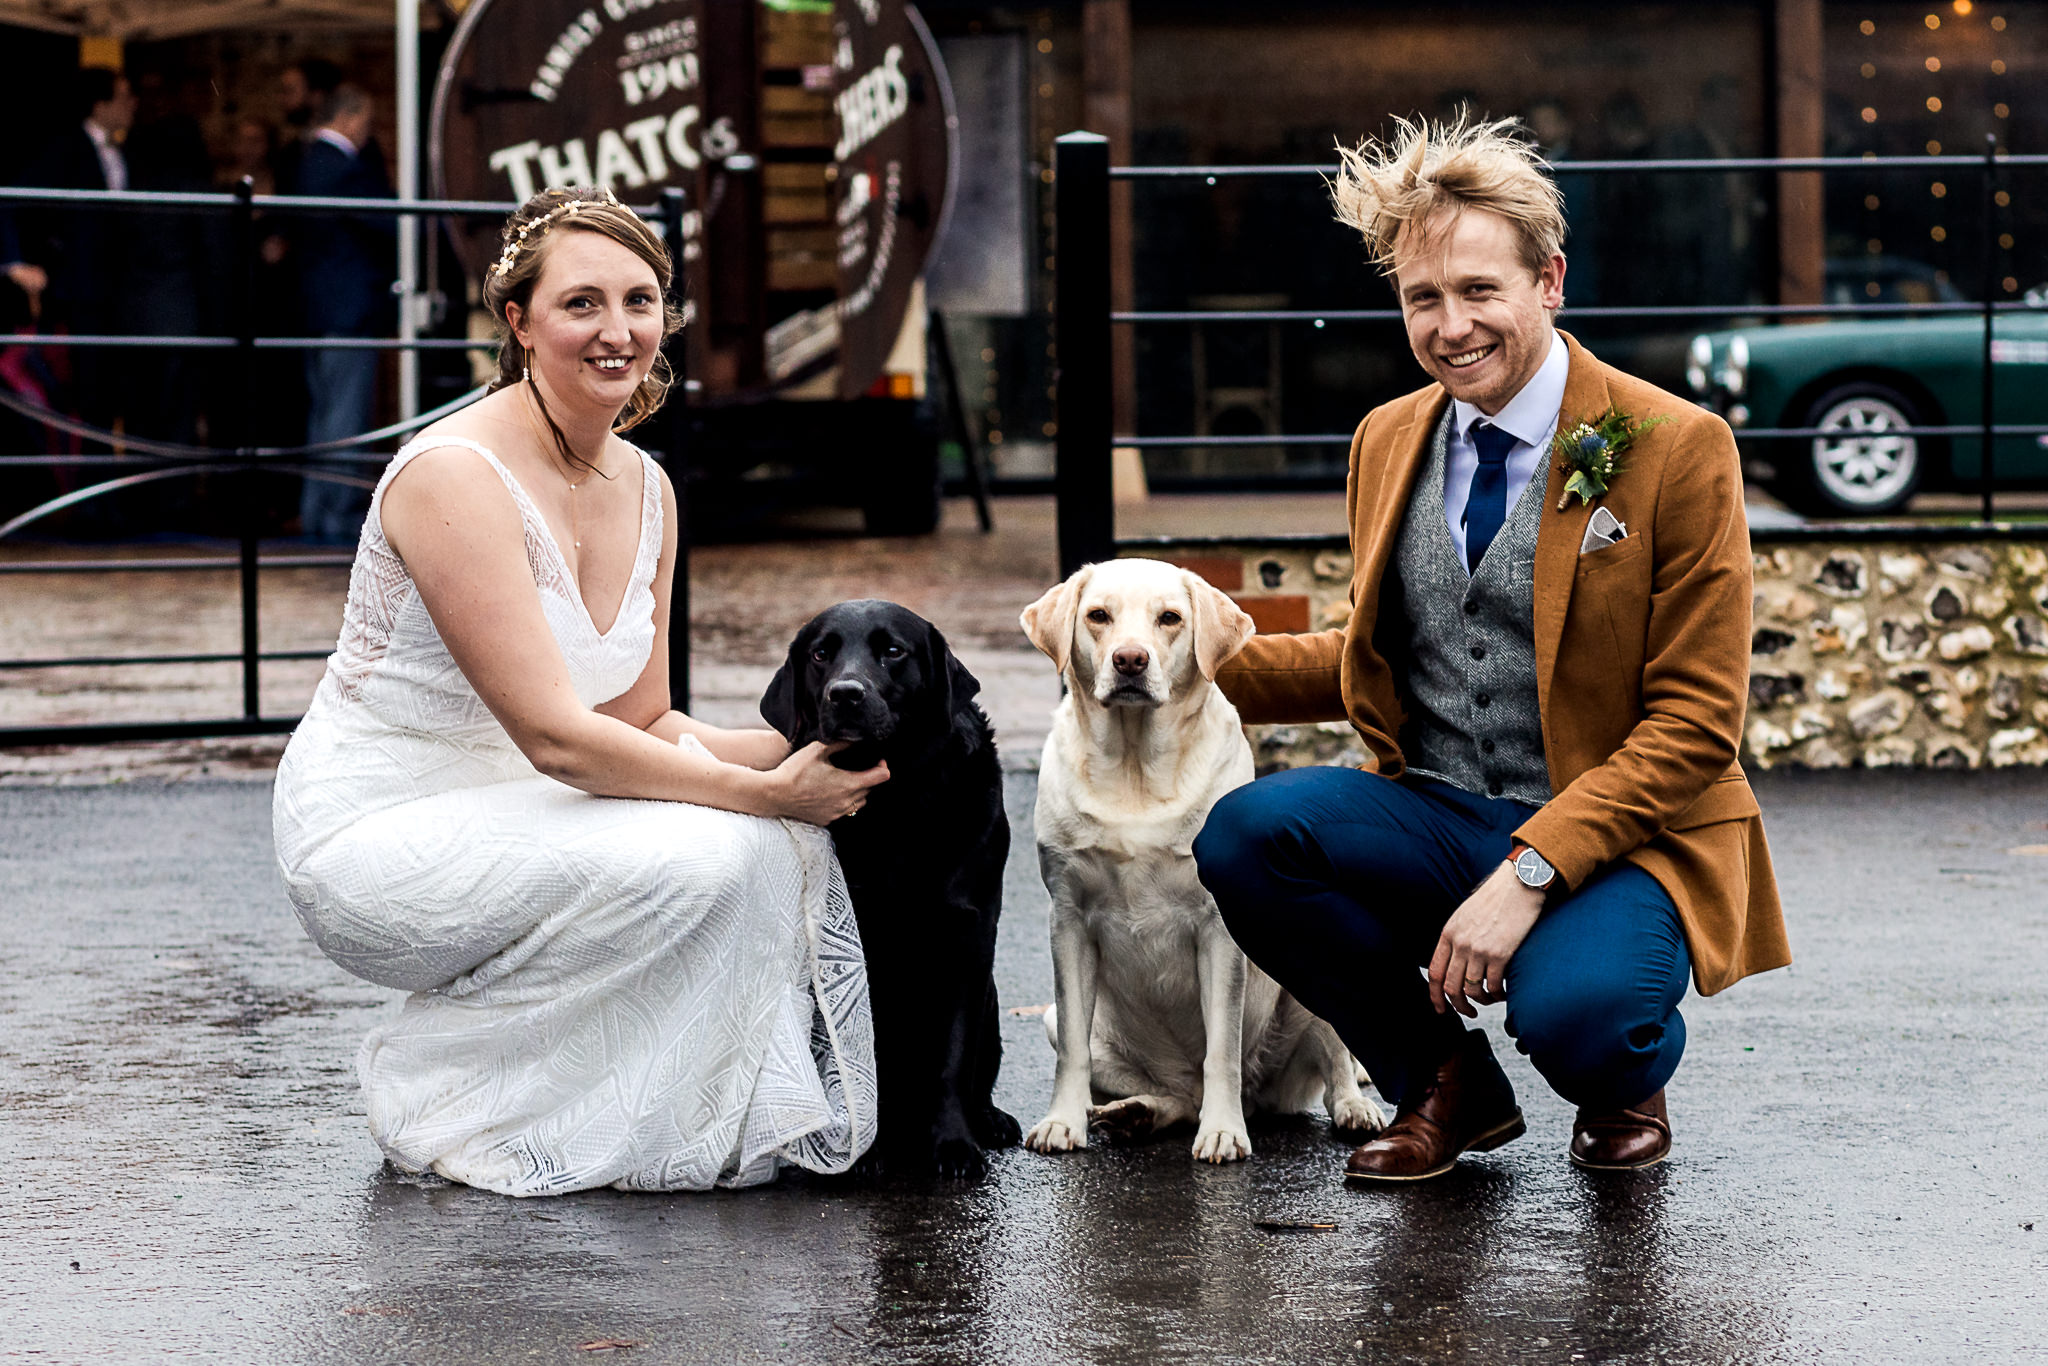 The Gathering Barn Wedding - Dogs at Weddings